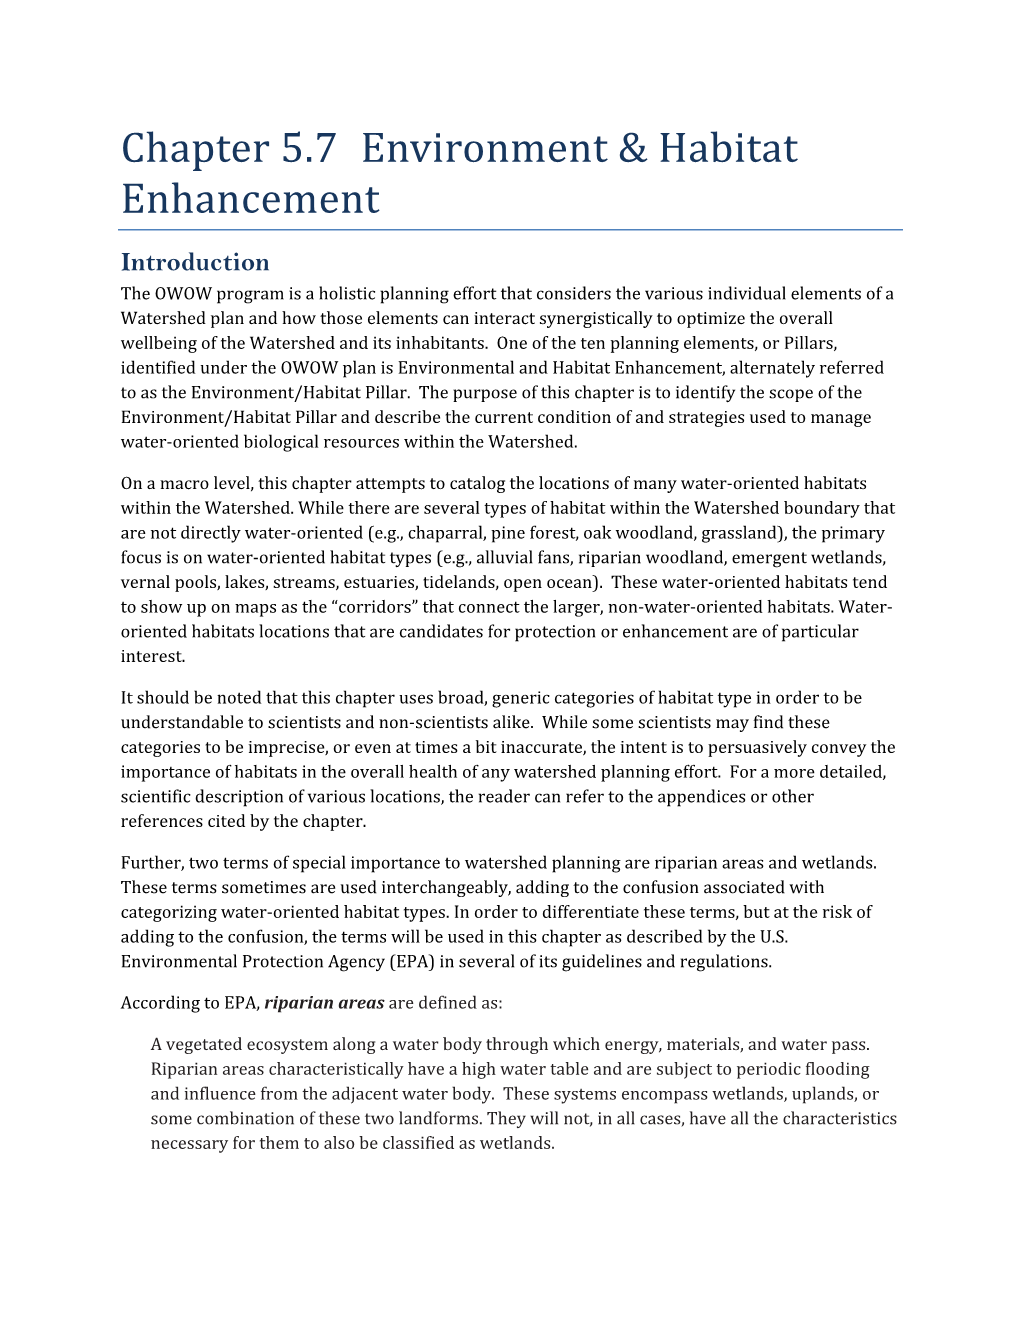 Chapter 5.7 Environment & Habitat Enhancement